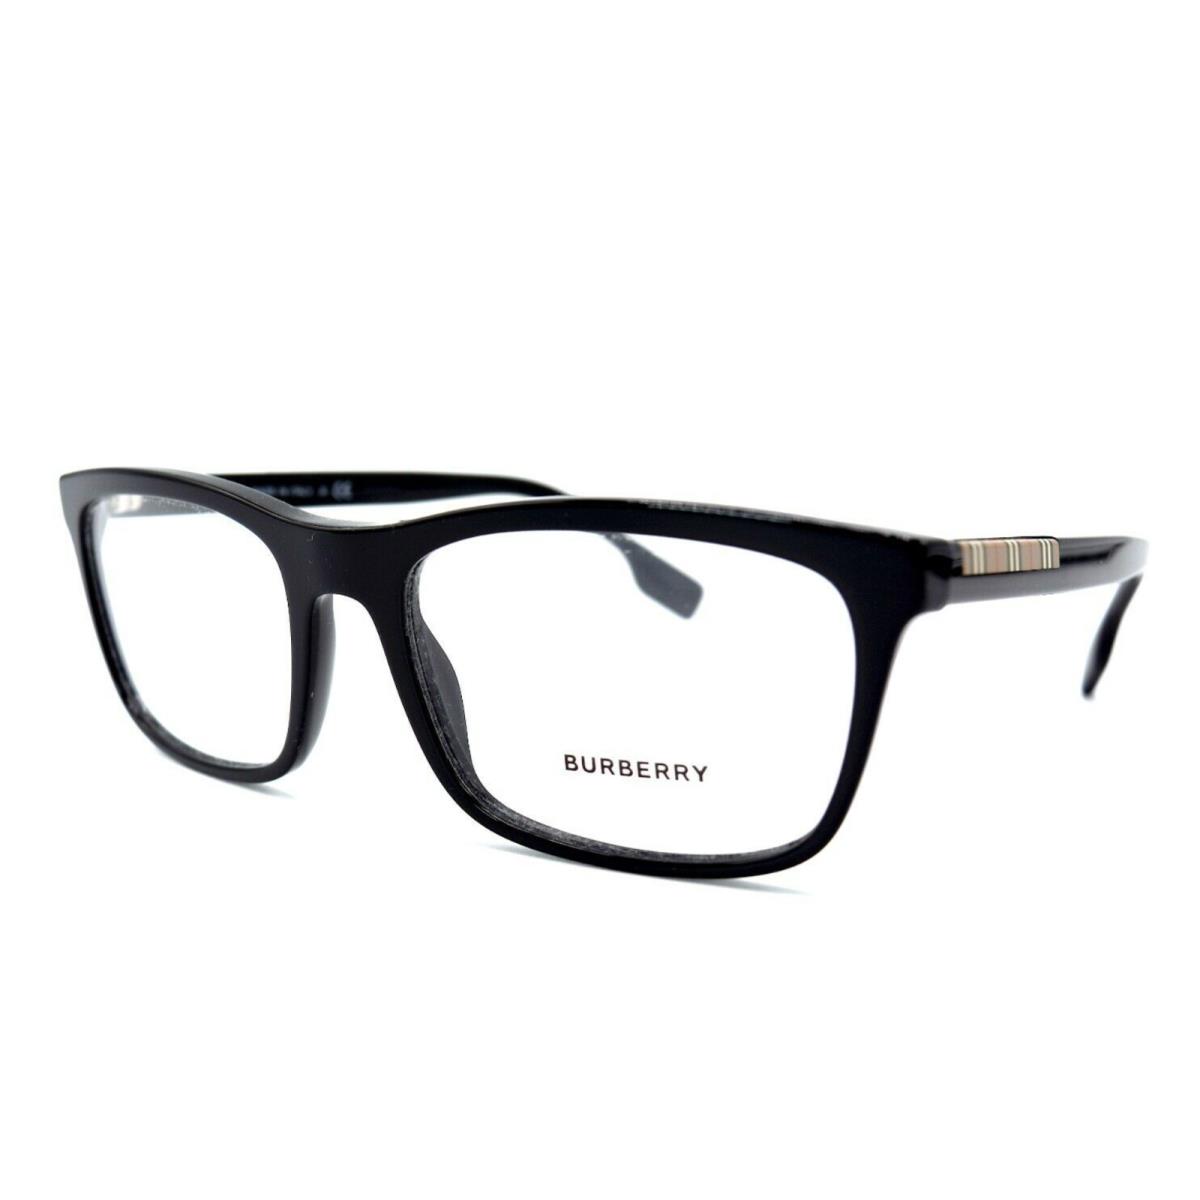 Burberry Eyeglasses B 2334 3001 55-18 145 Black Frames W/plaid Design Hinges